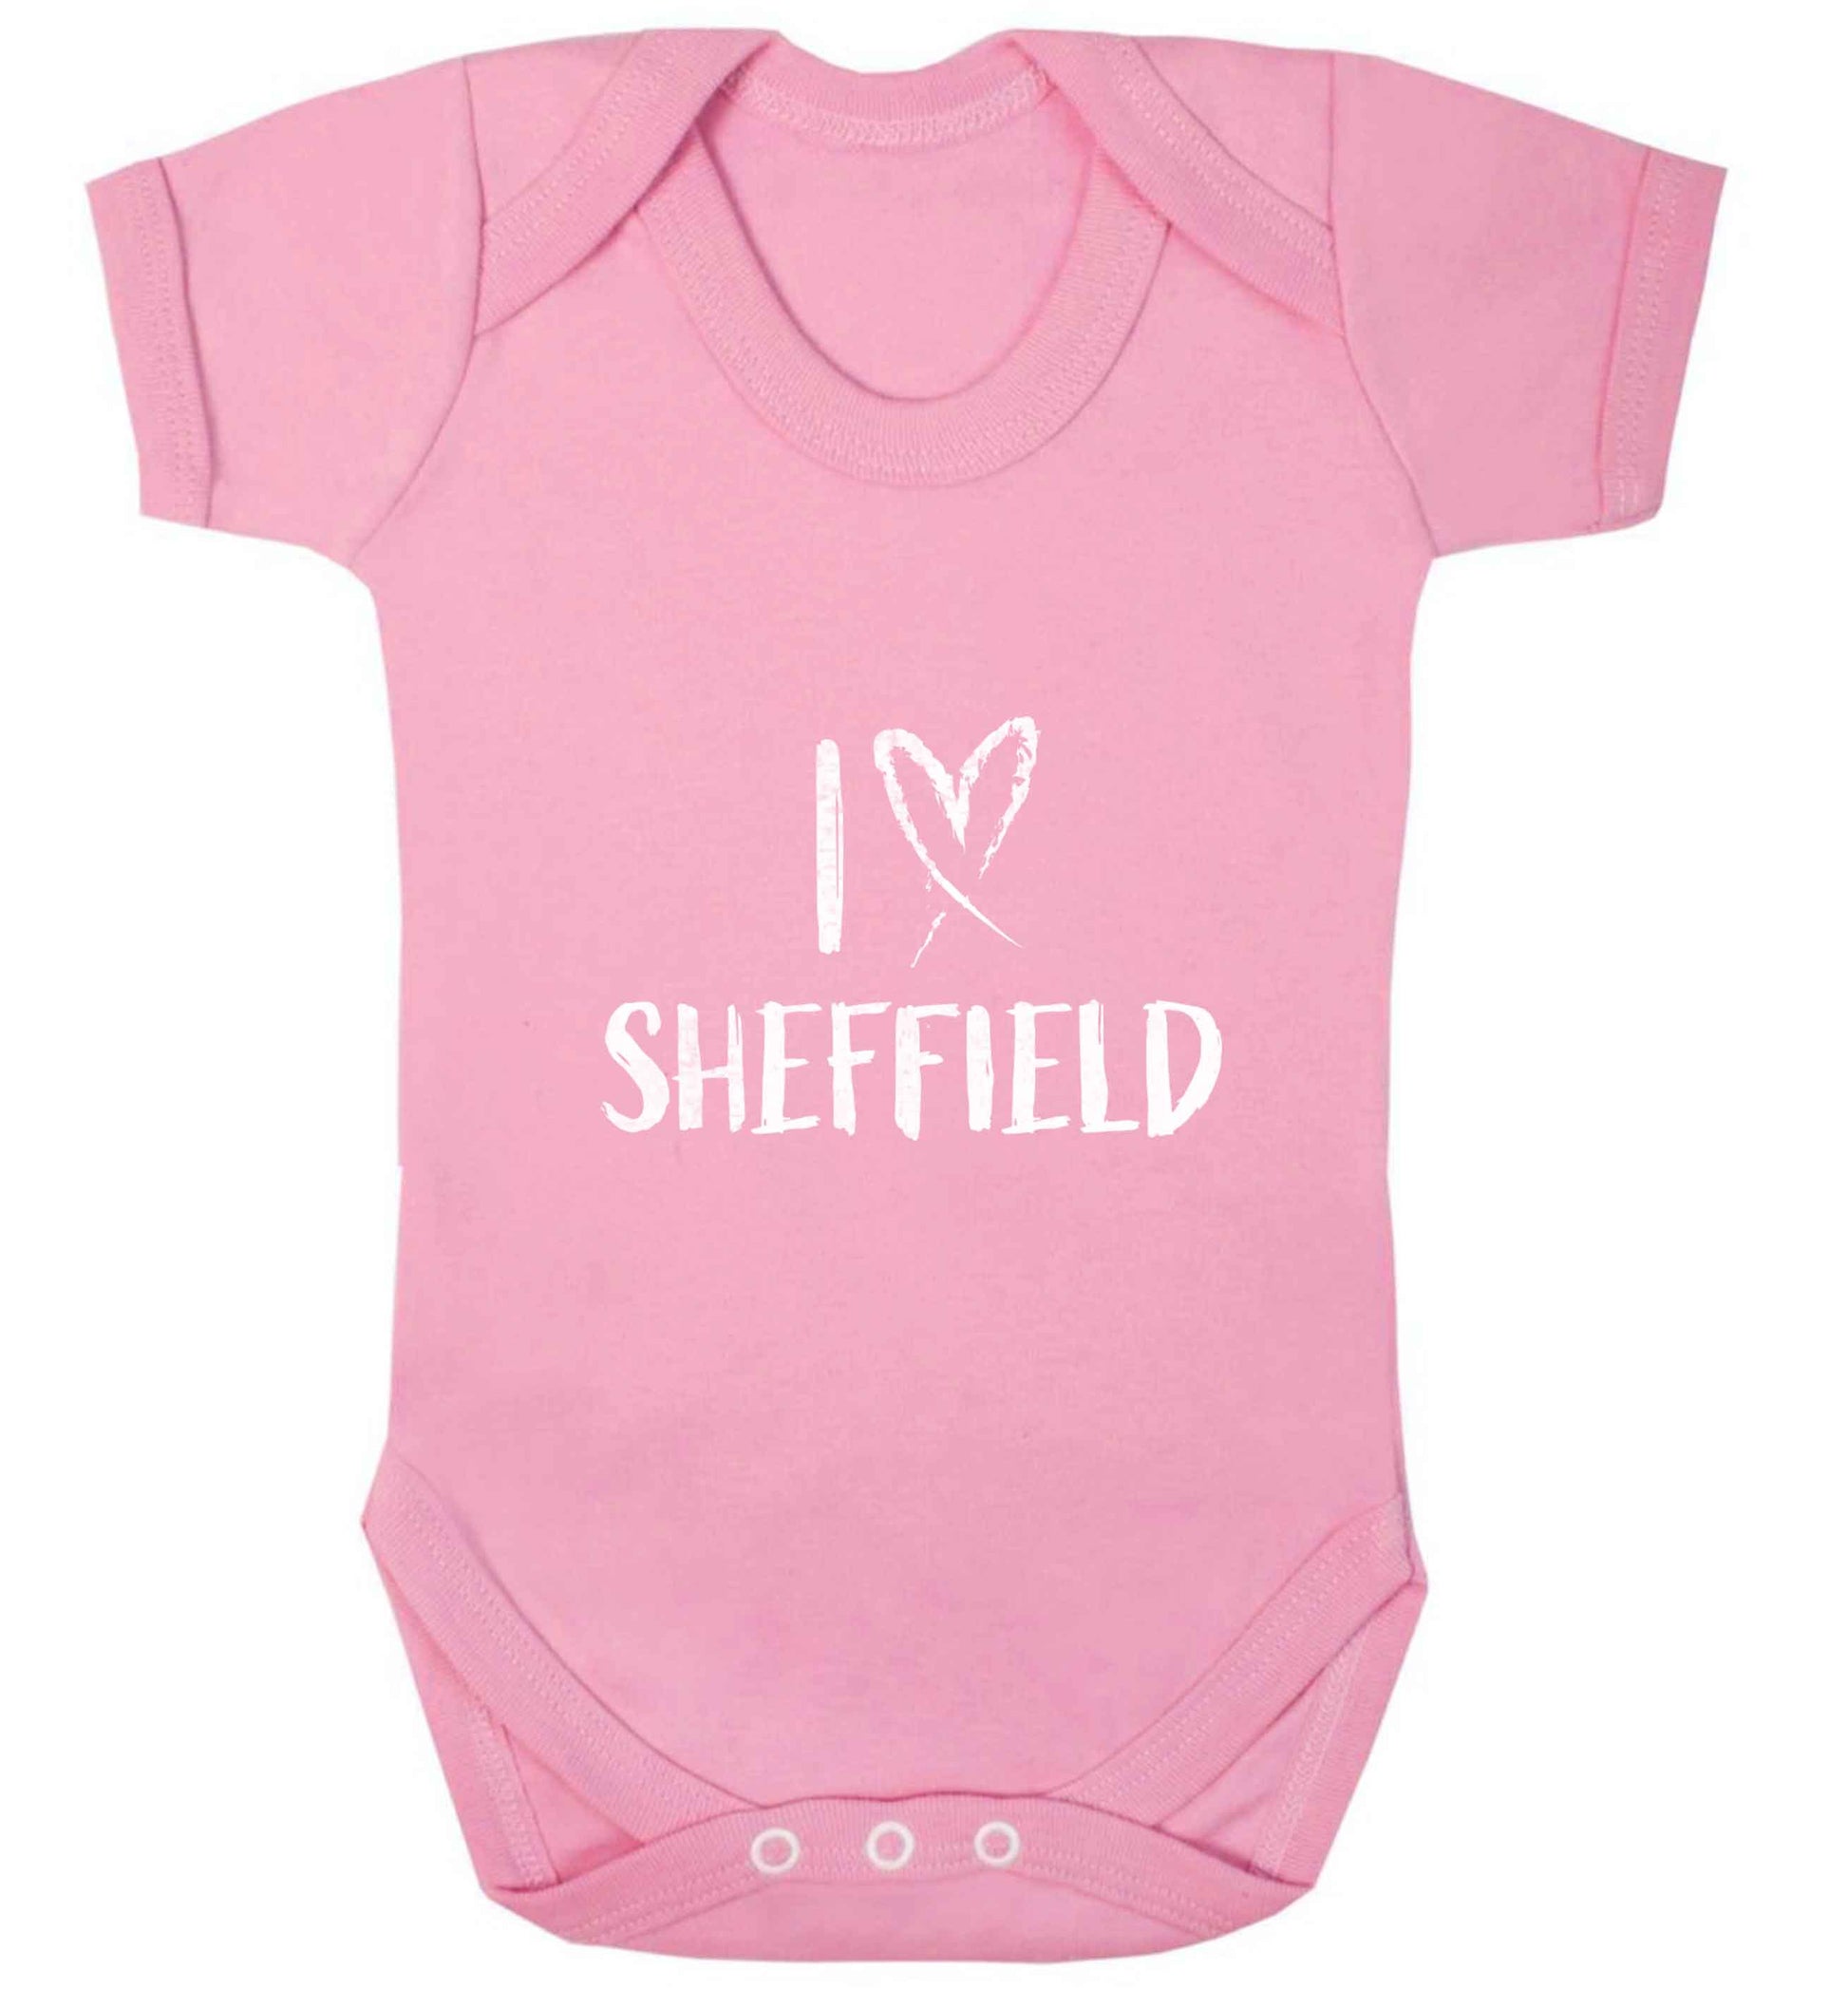 I love Sheffield baby vest pale pink 18-24 months